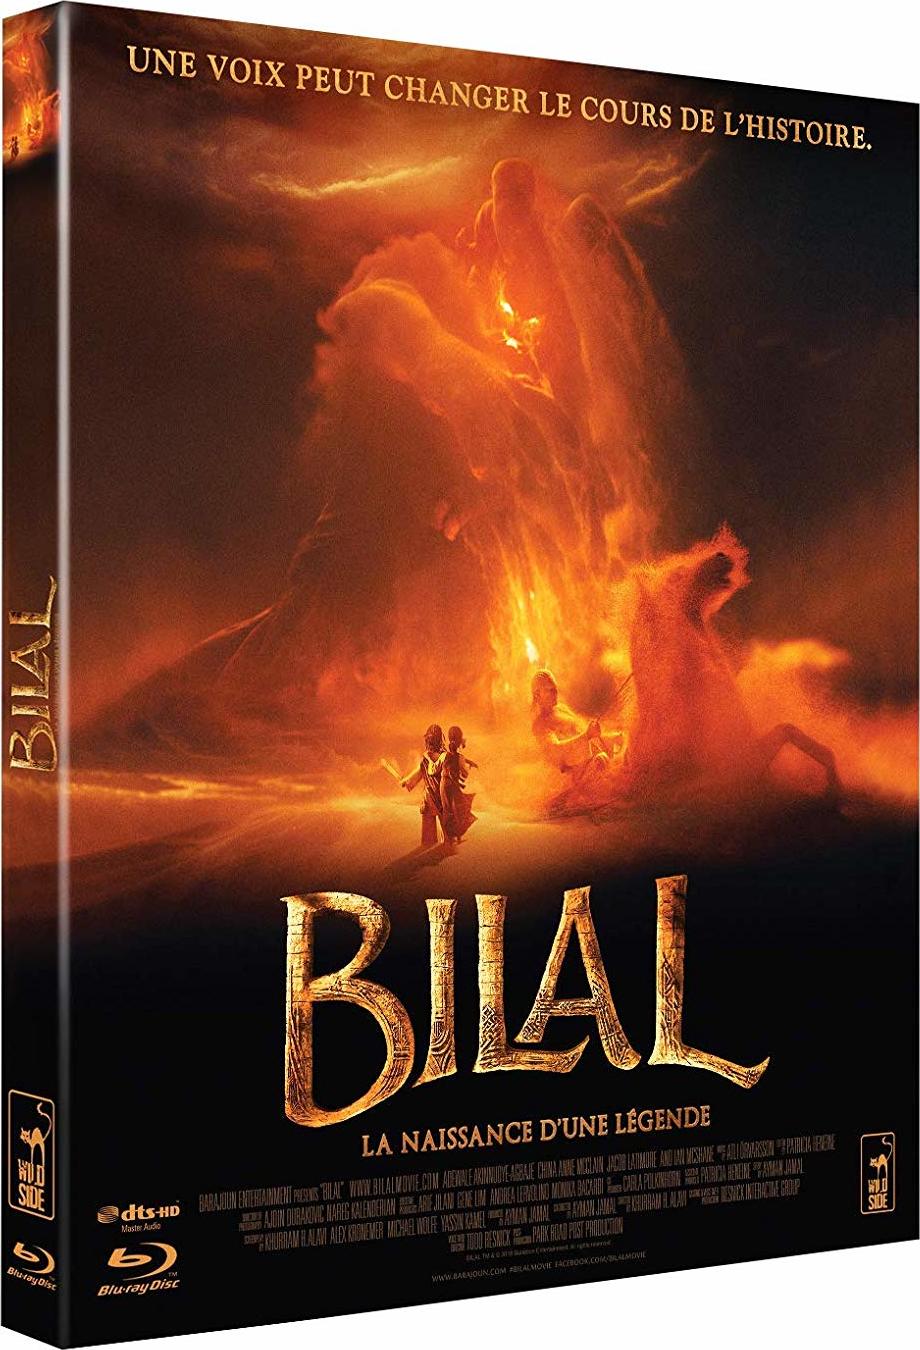 Bilal: A New Breed of Hero Blu-ray (France)